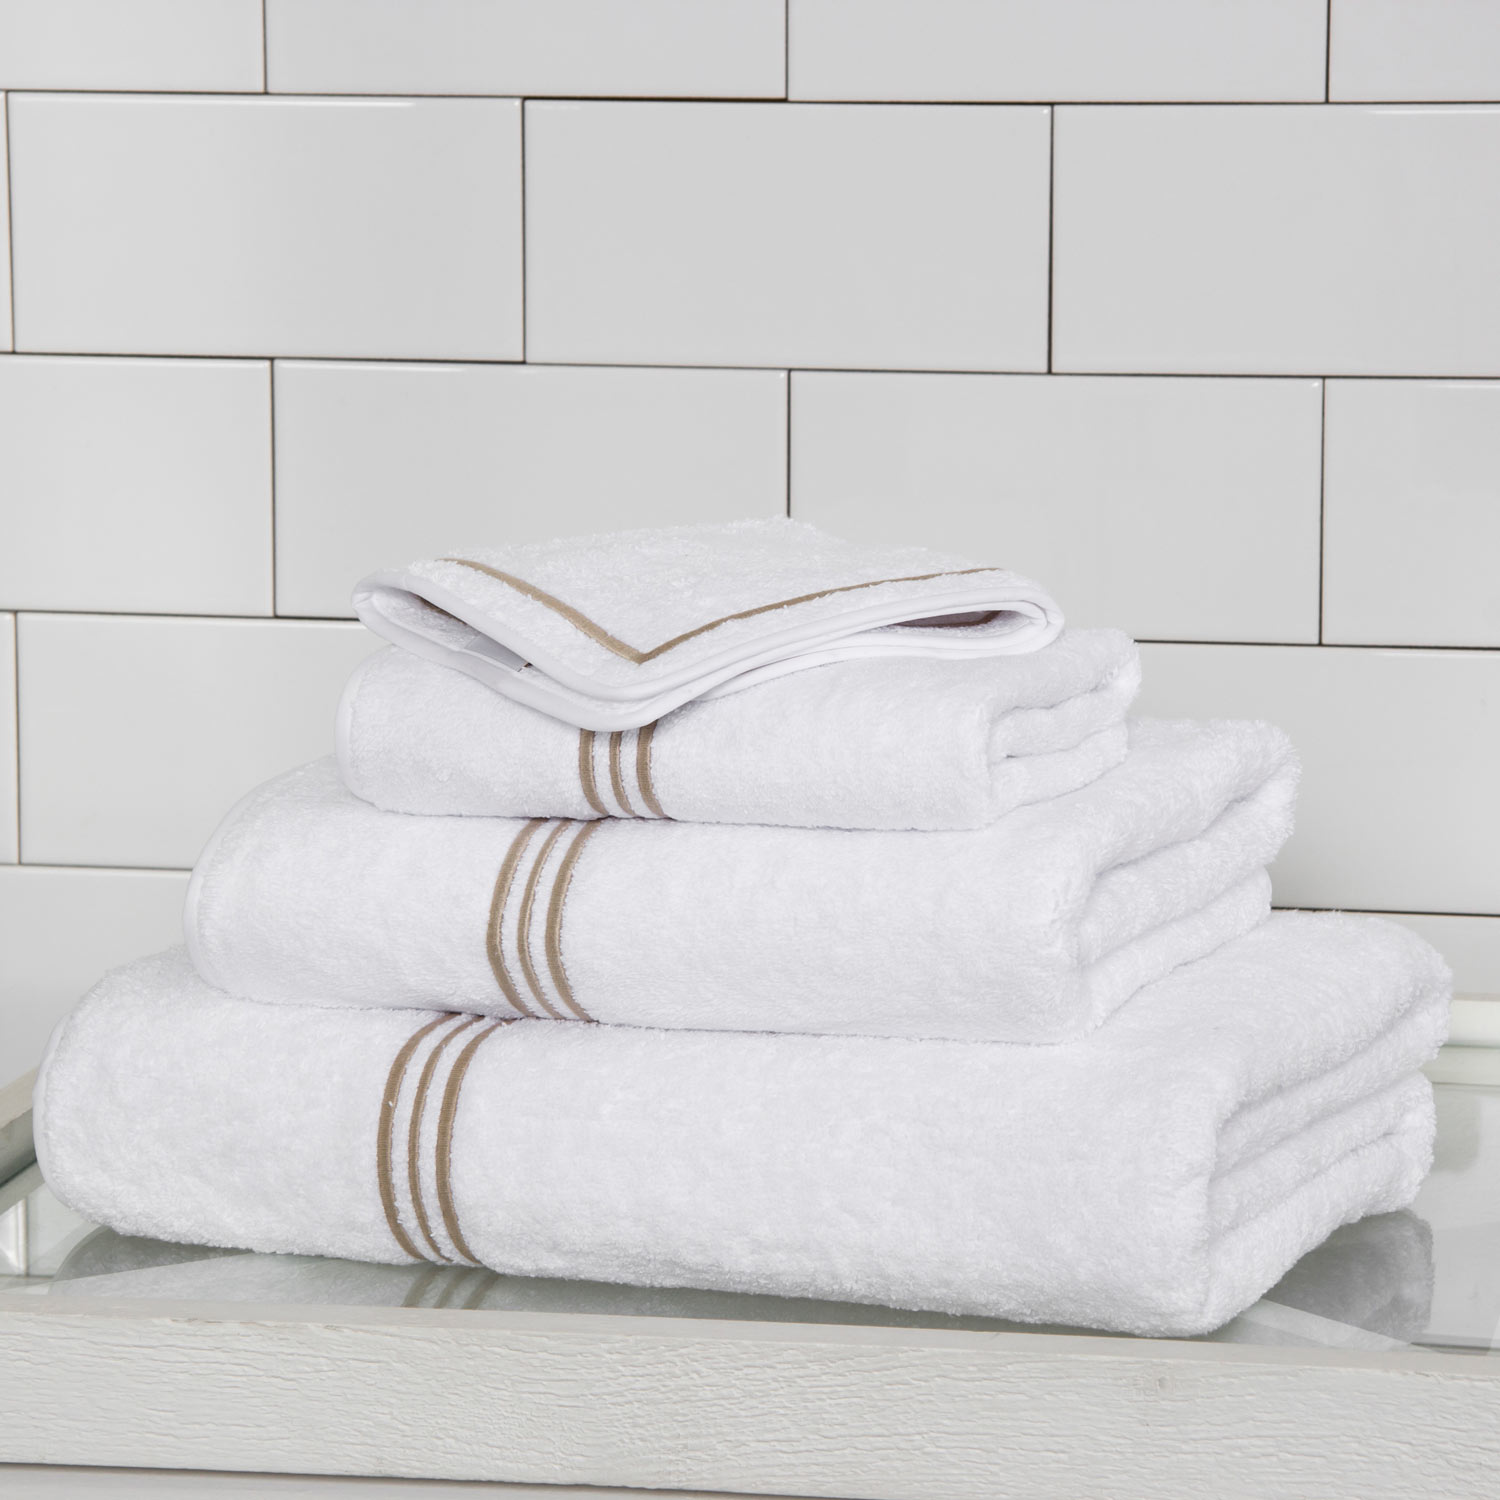 Черно белые полотенца. Полотенце. Белое полотенце. Белоснежные полотенца. Стильные полотенца в ванной.